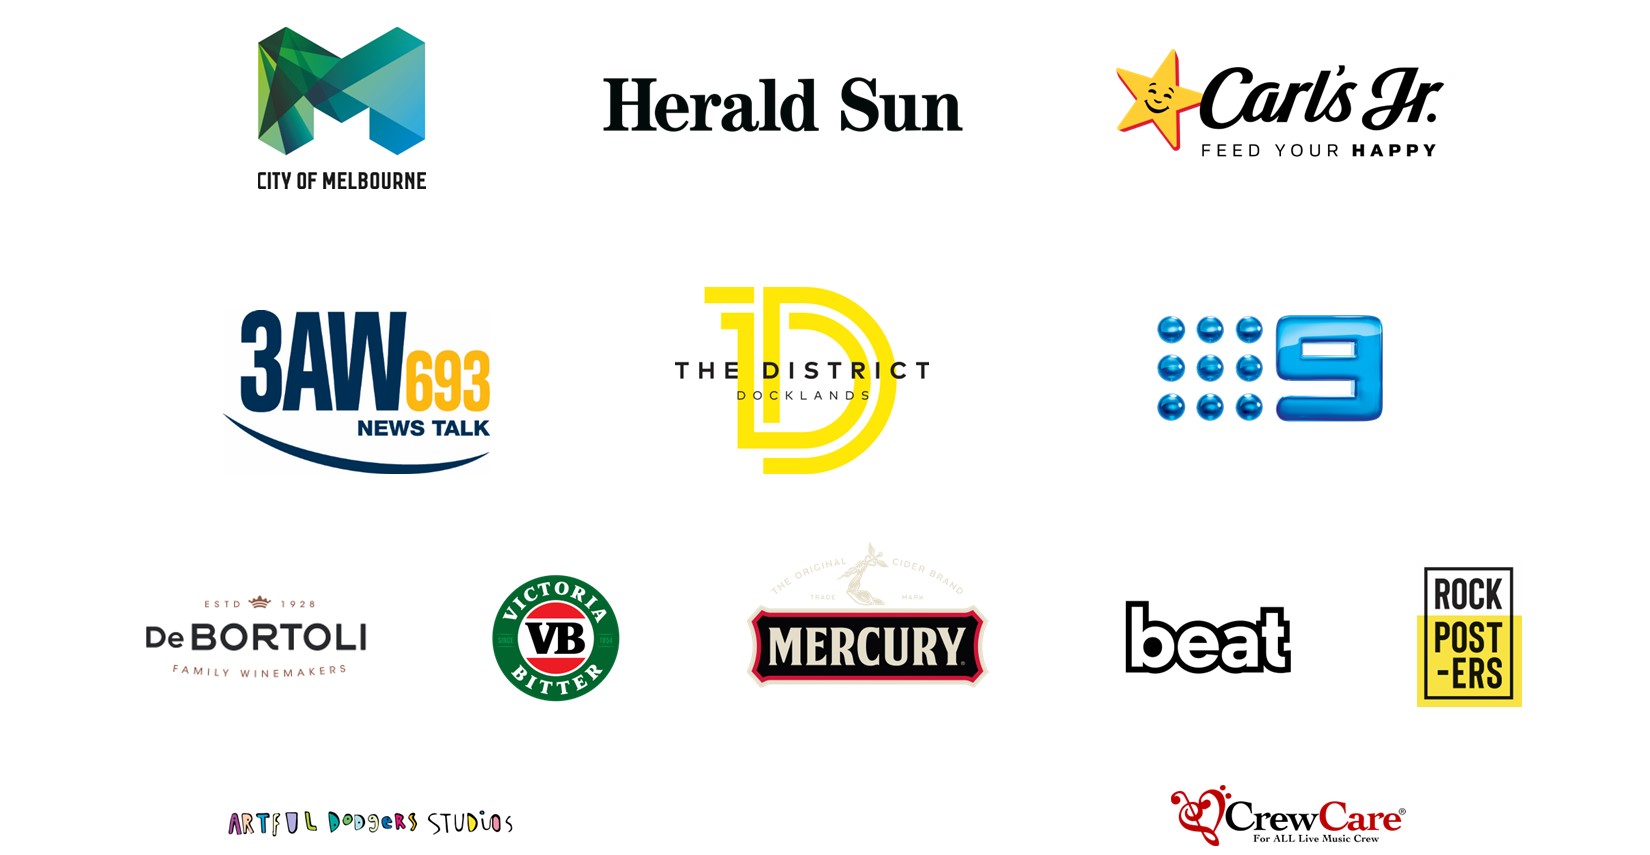 Partners logos